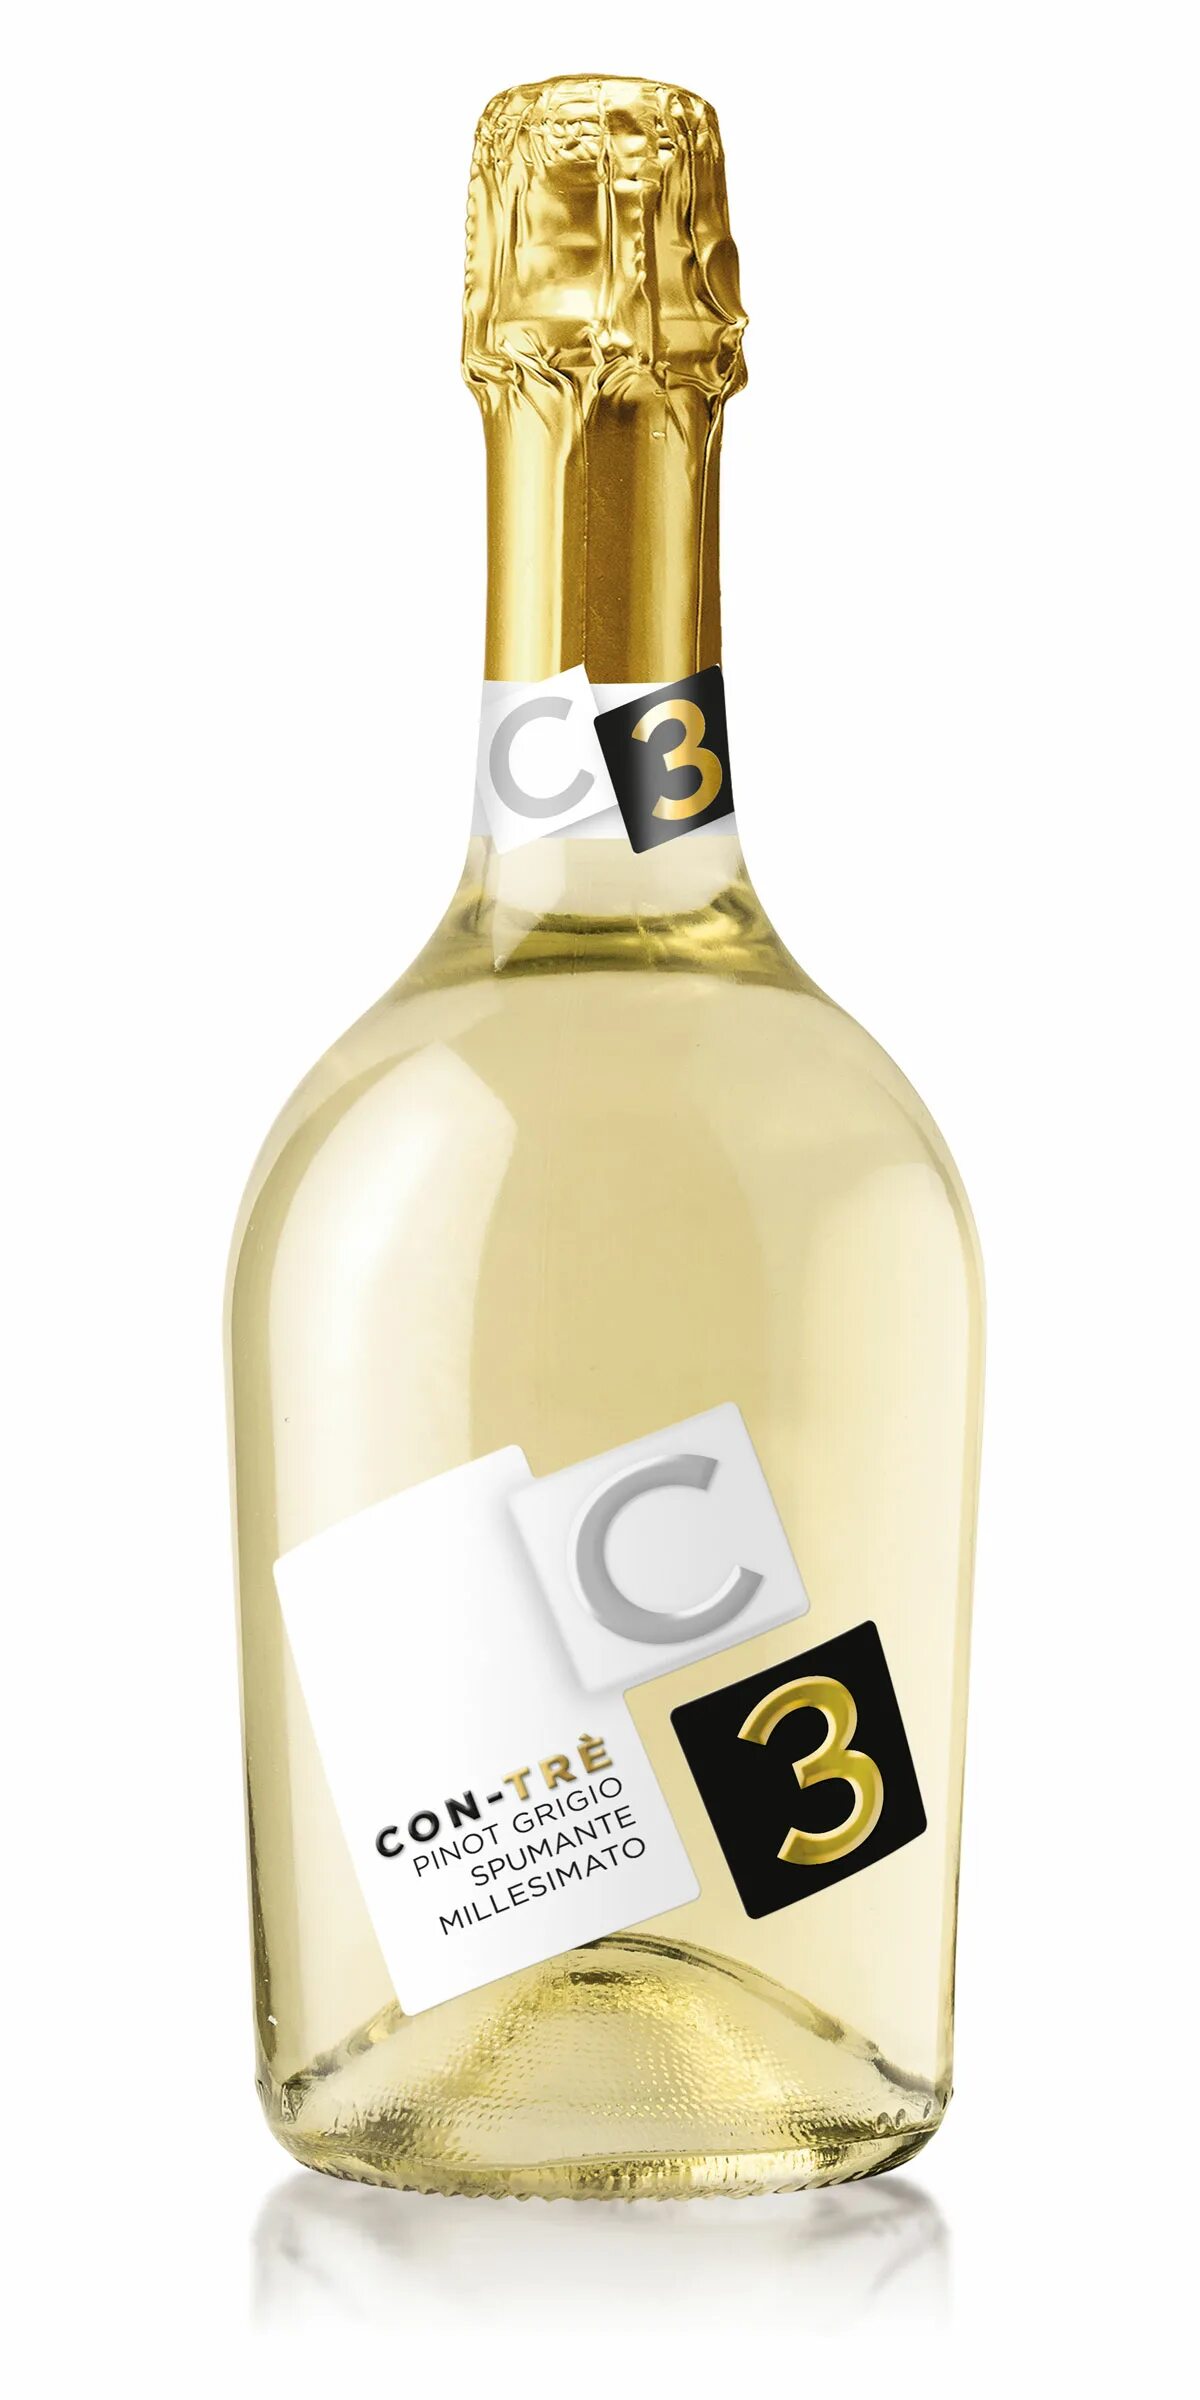 Contarini prosecco. Игристое вино Contarini con-tre Bianco Spumante Millesimato Extra Dry, 0.75 л. Вино игристое Пино Пино Пино Гриджио. Спуманте Бьянко палаццо Нобиле. Пино Гриджио игристое белое.